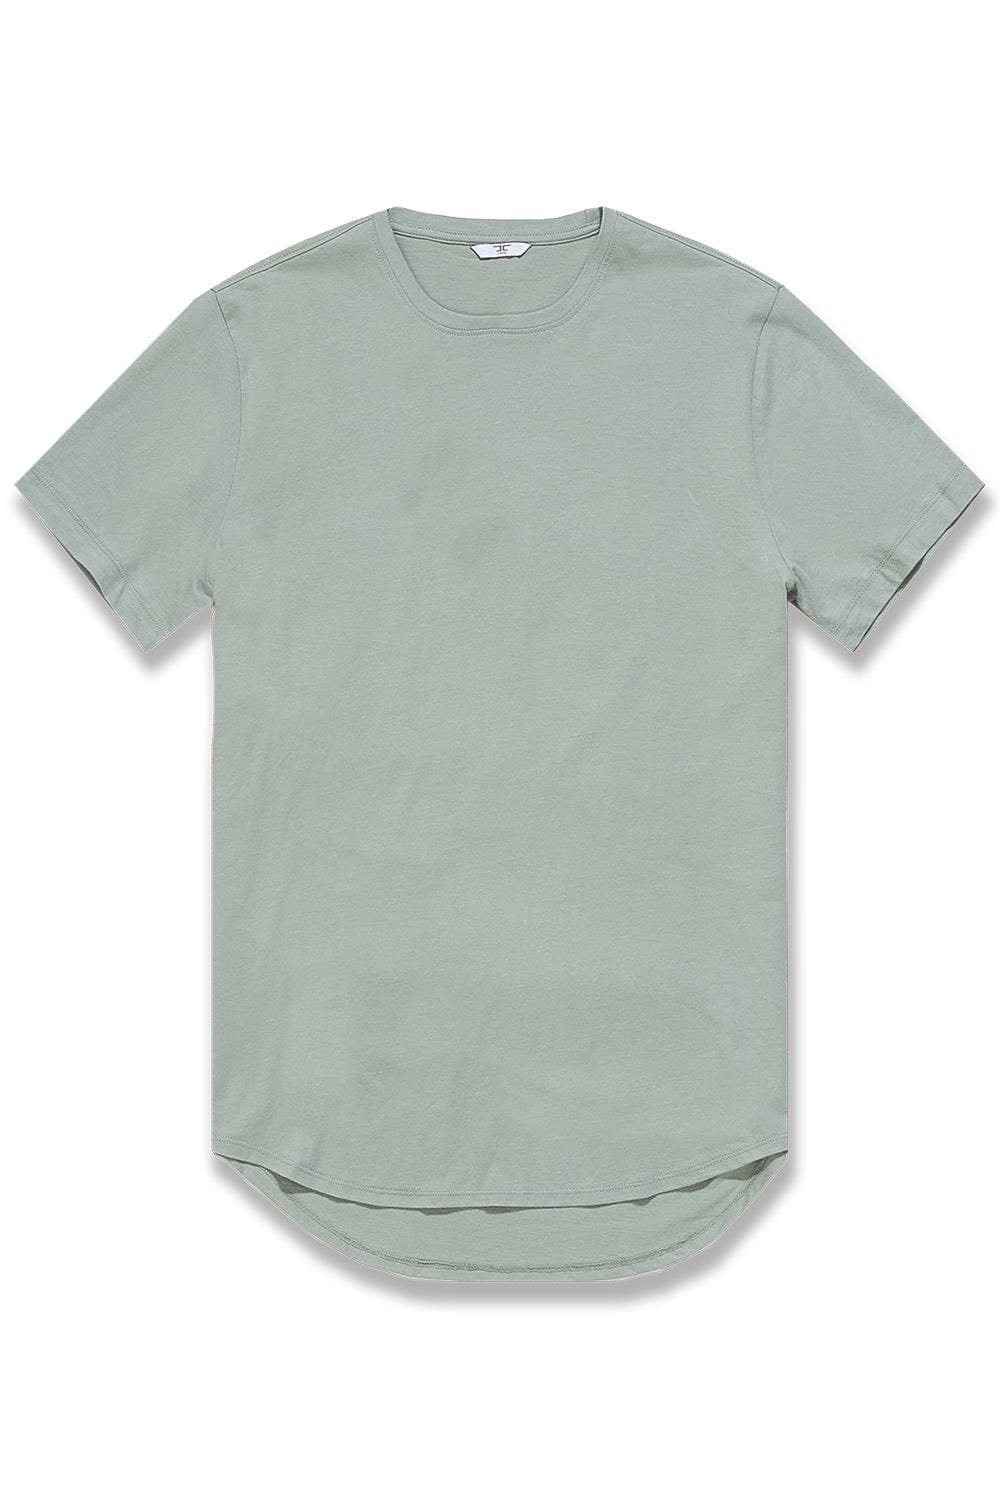 Jordan Craig Scallop T-Shirt (Athletic Fit) Desert Sage / S